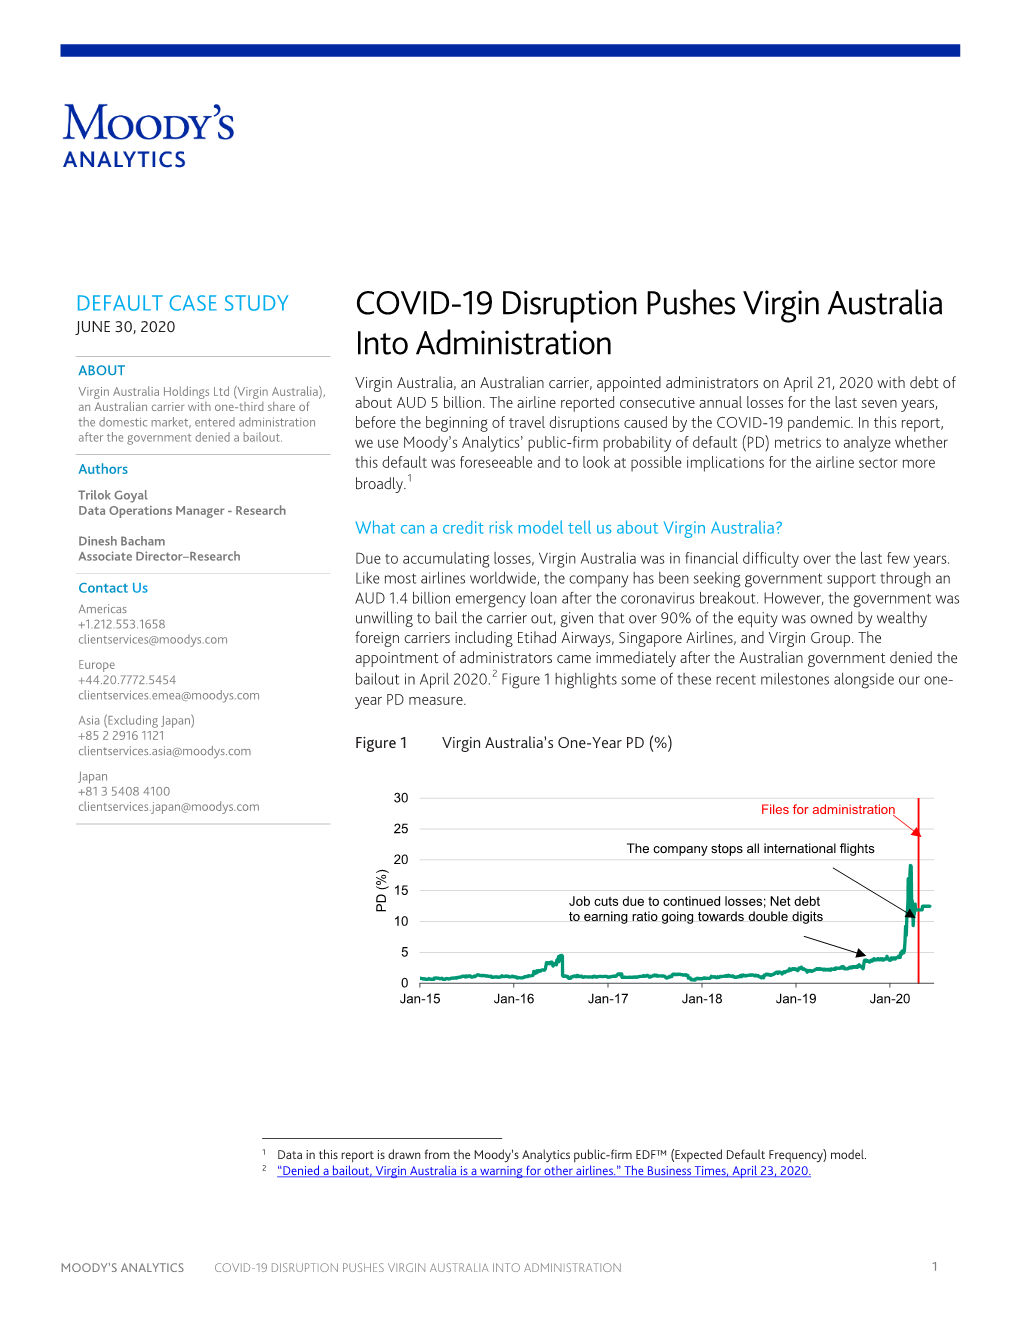 Covid-19 Disruption Pushes Virgin Australia Into Administration 1